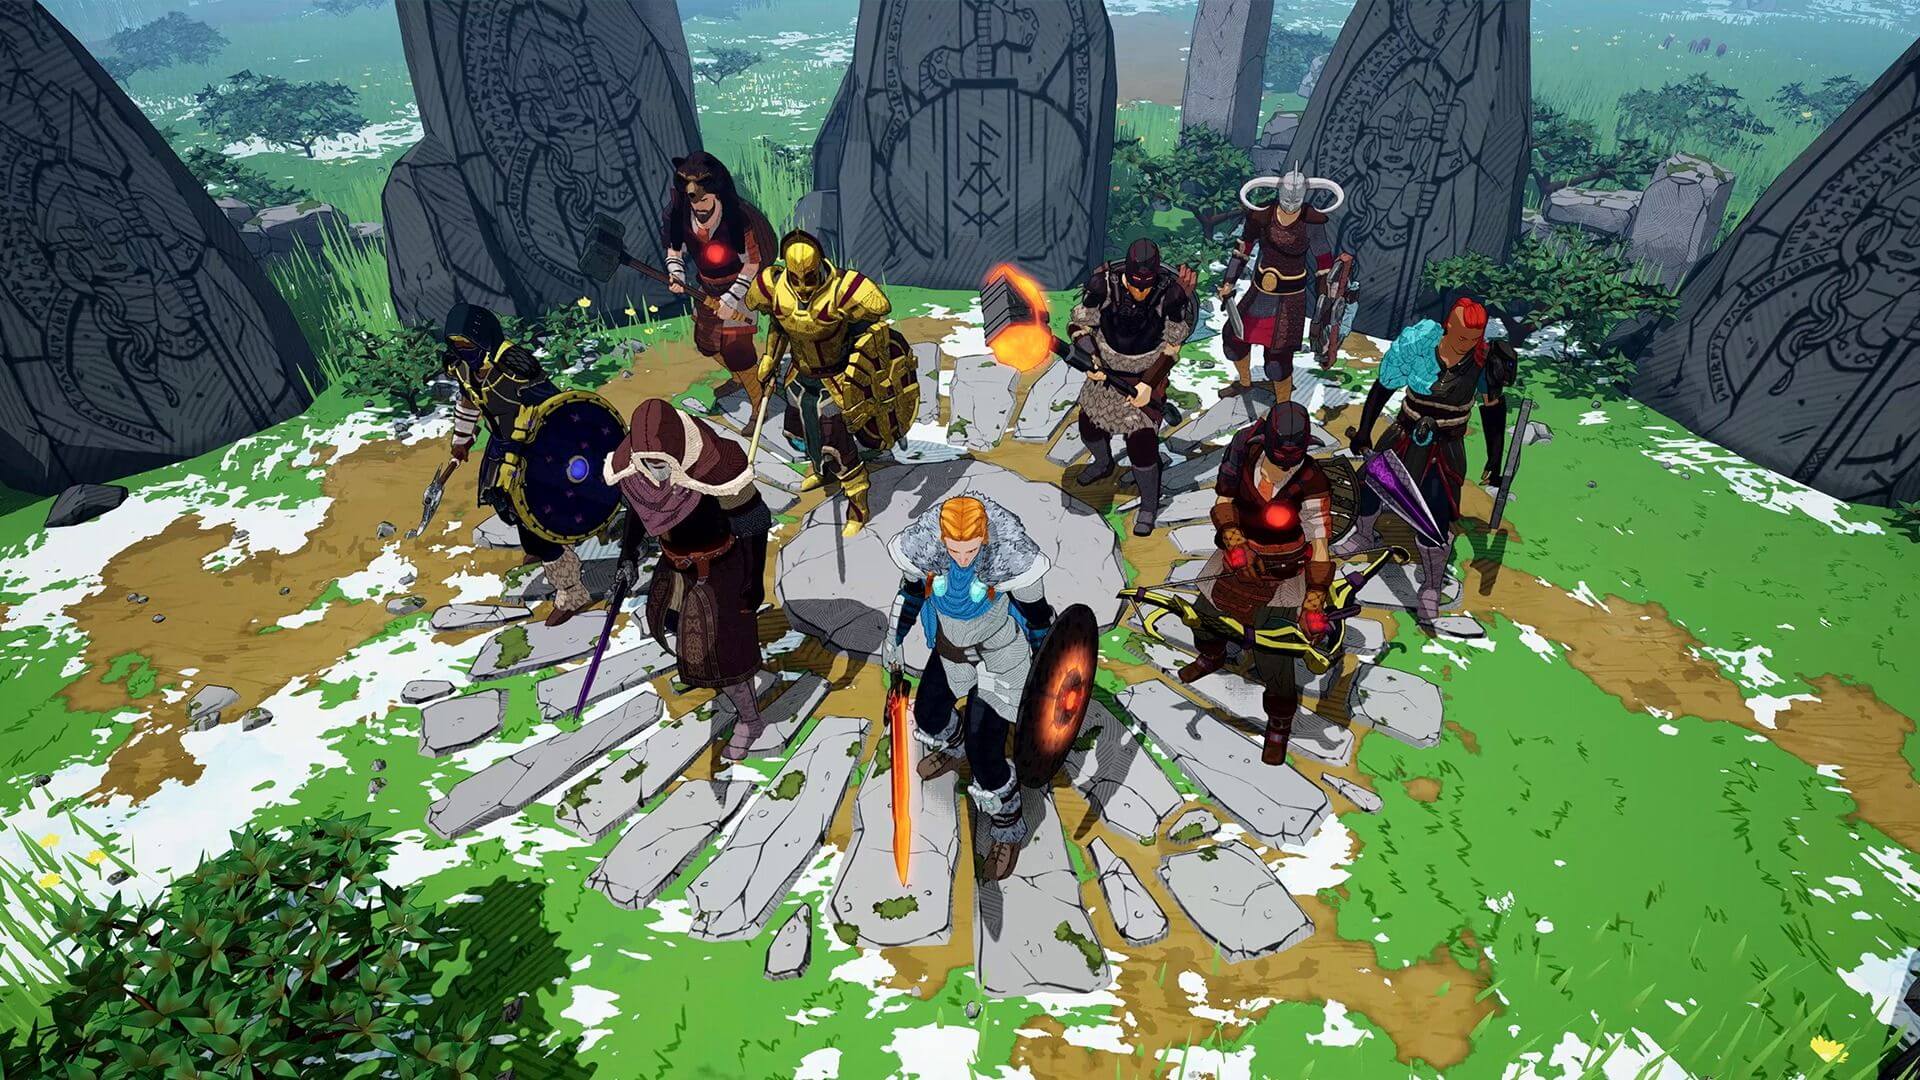 tribes of midgard servers down